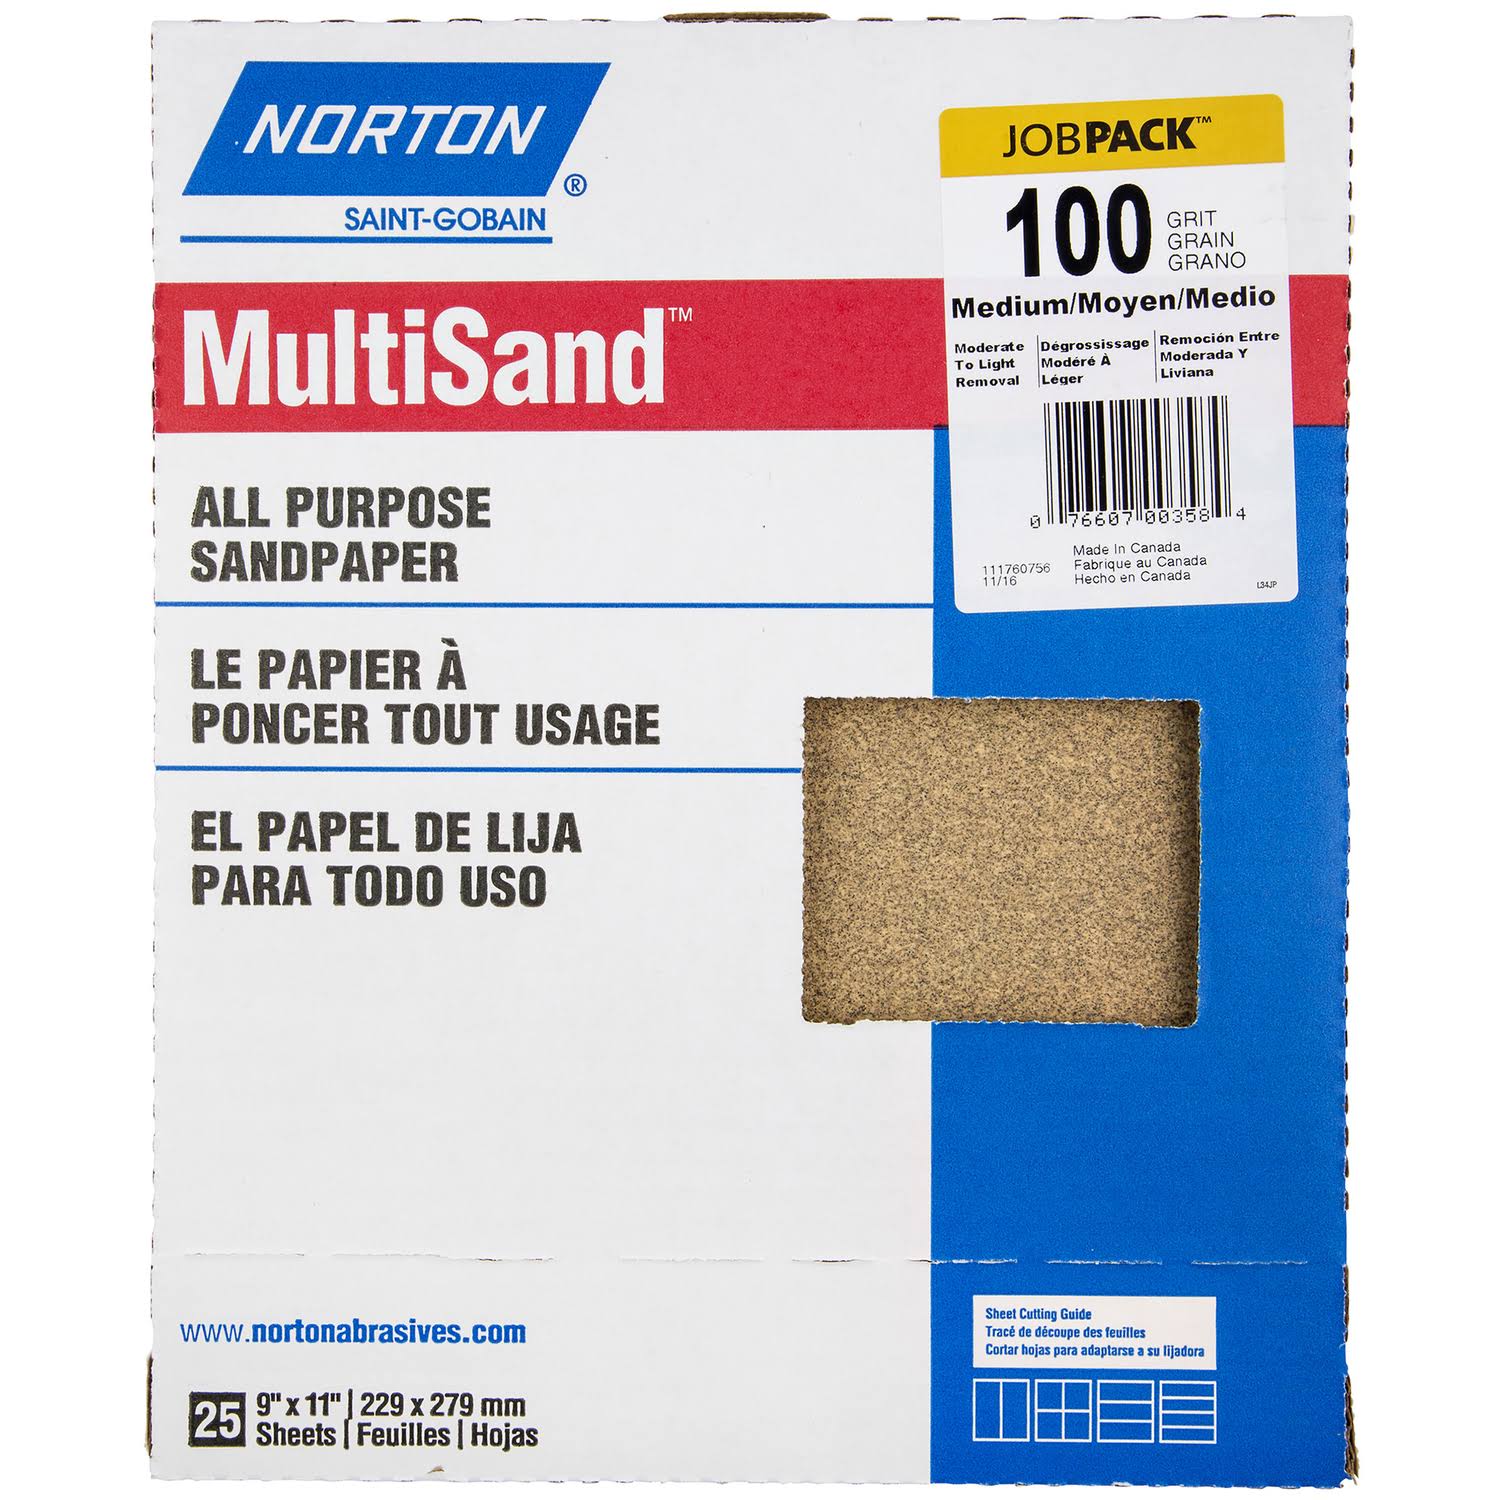 Norton Multisand All Purpose Sandpaper - 25 Sheets, 9"x11"